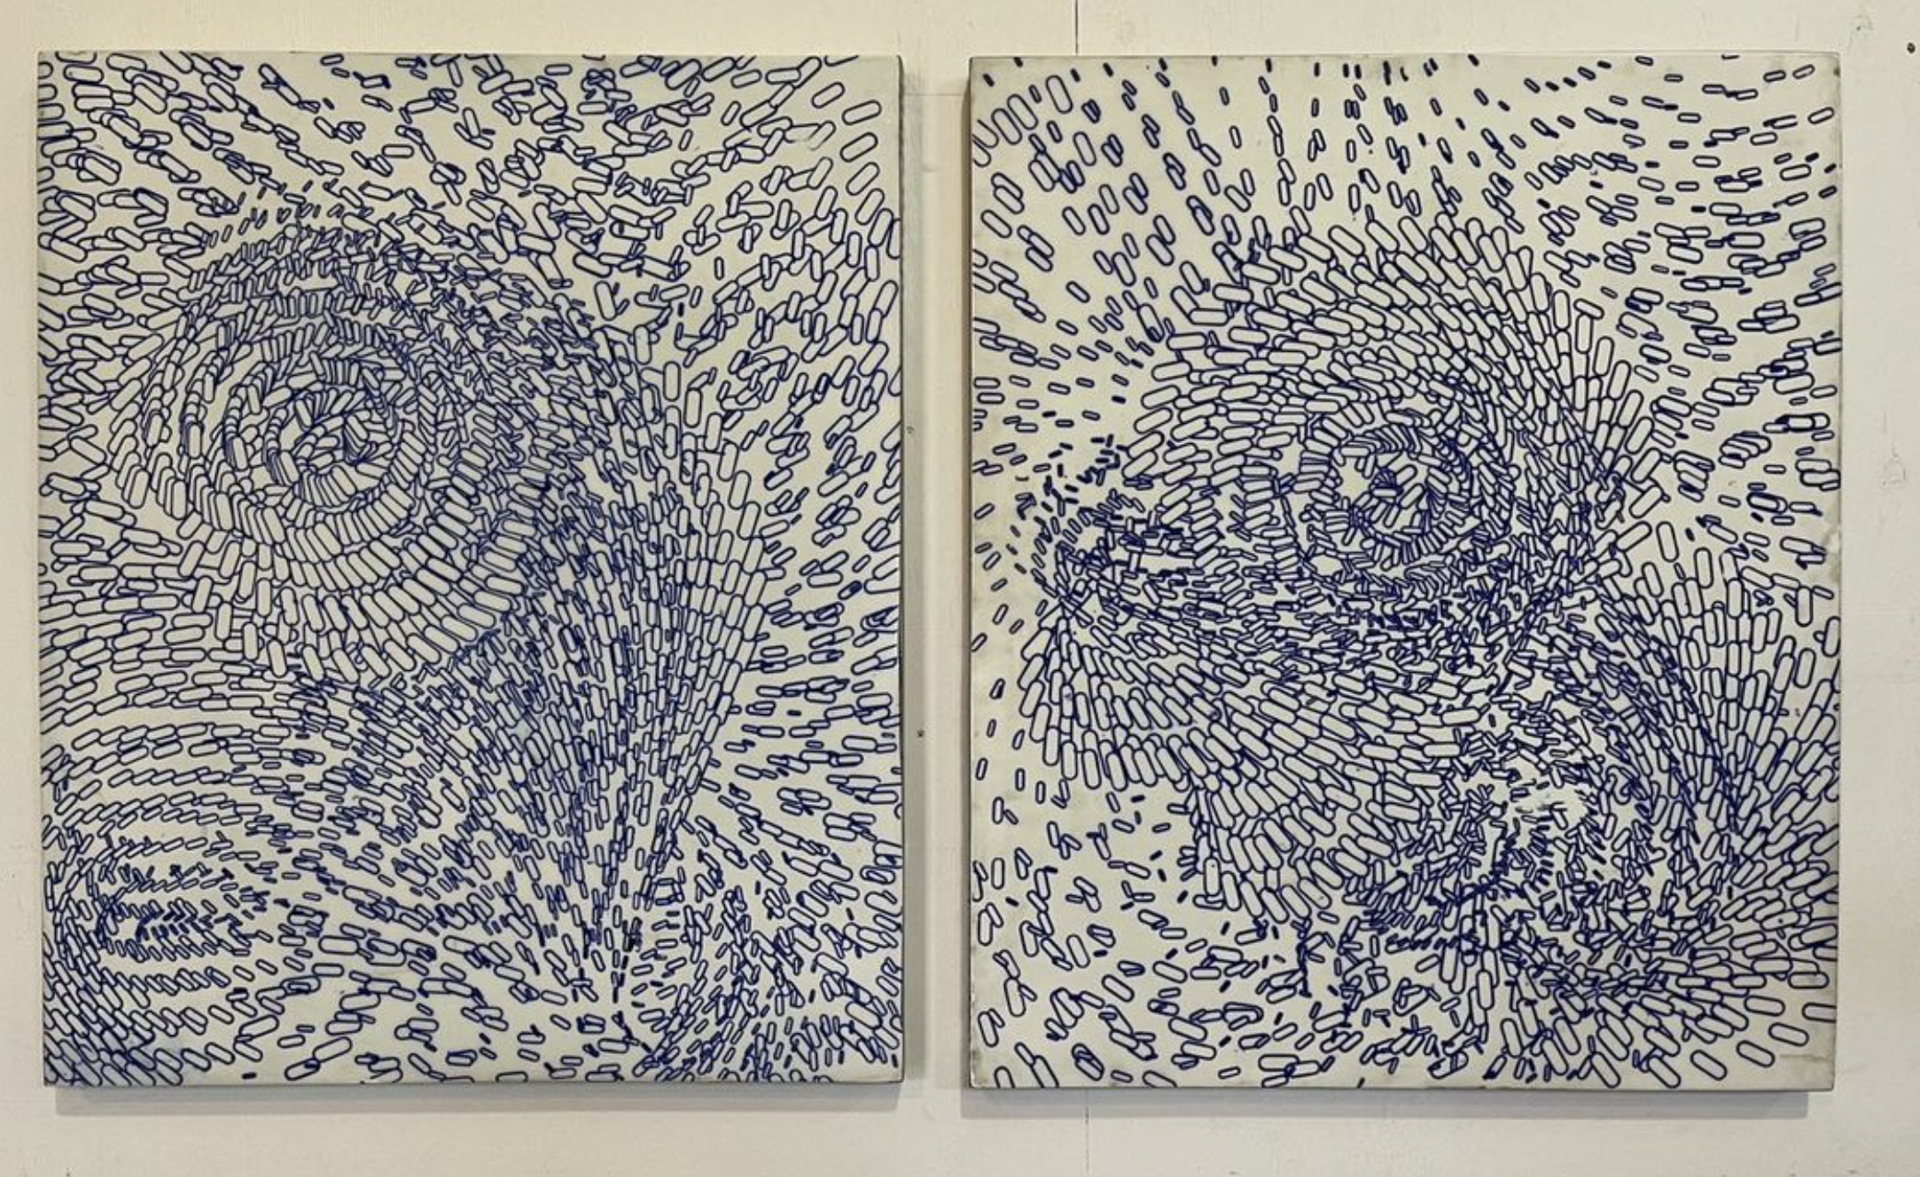 Blue Print 1 (left) by Randy Colosky